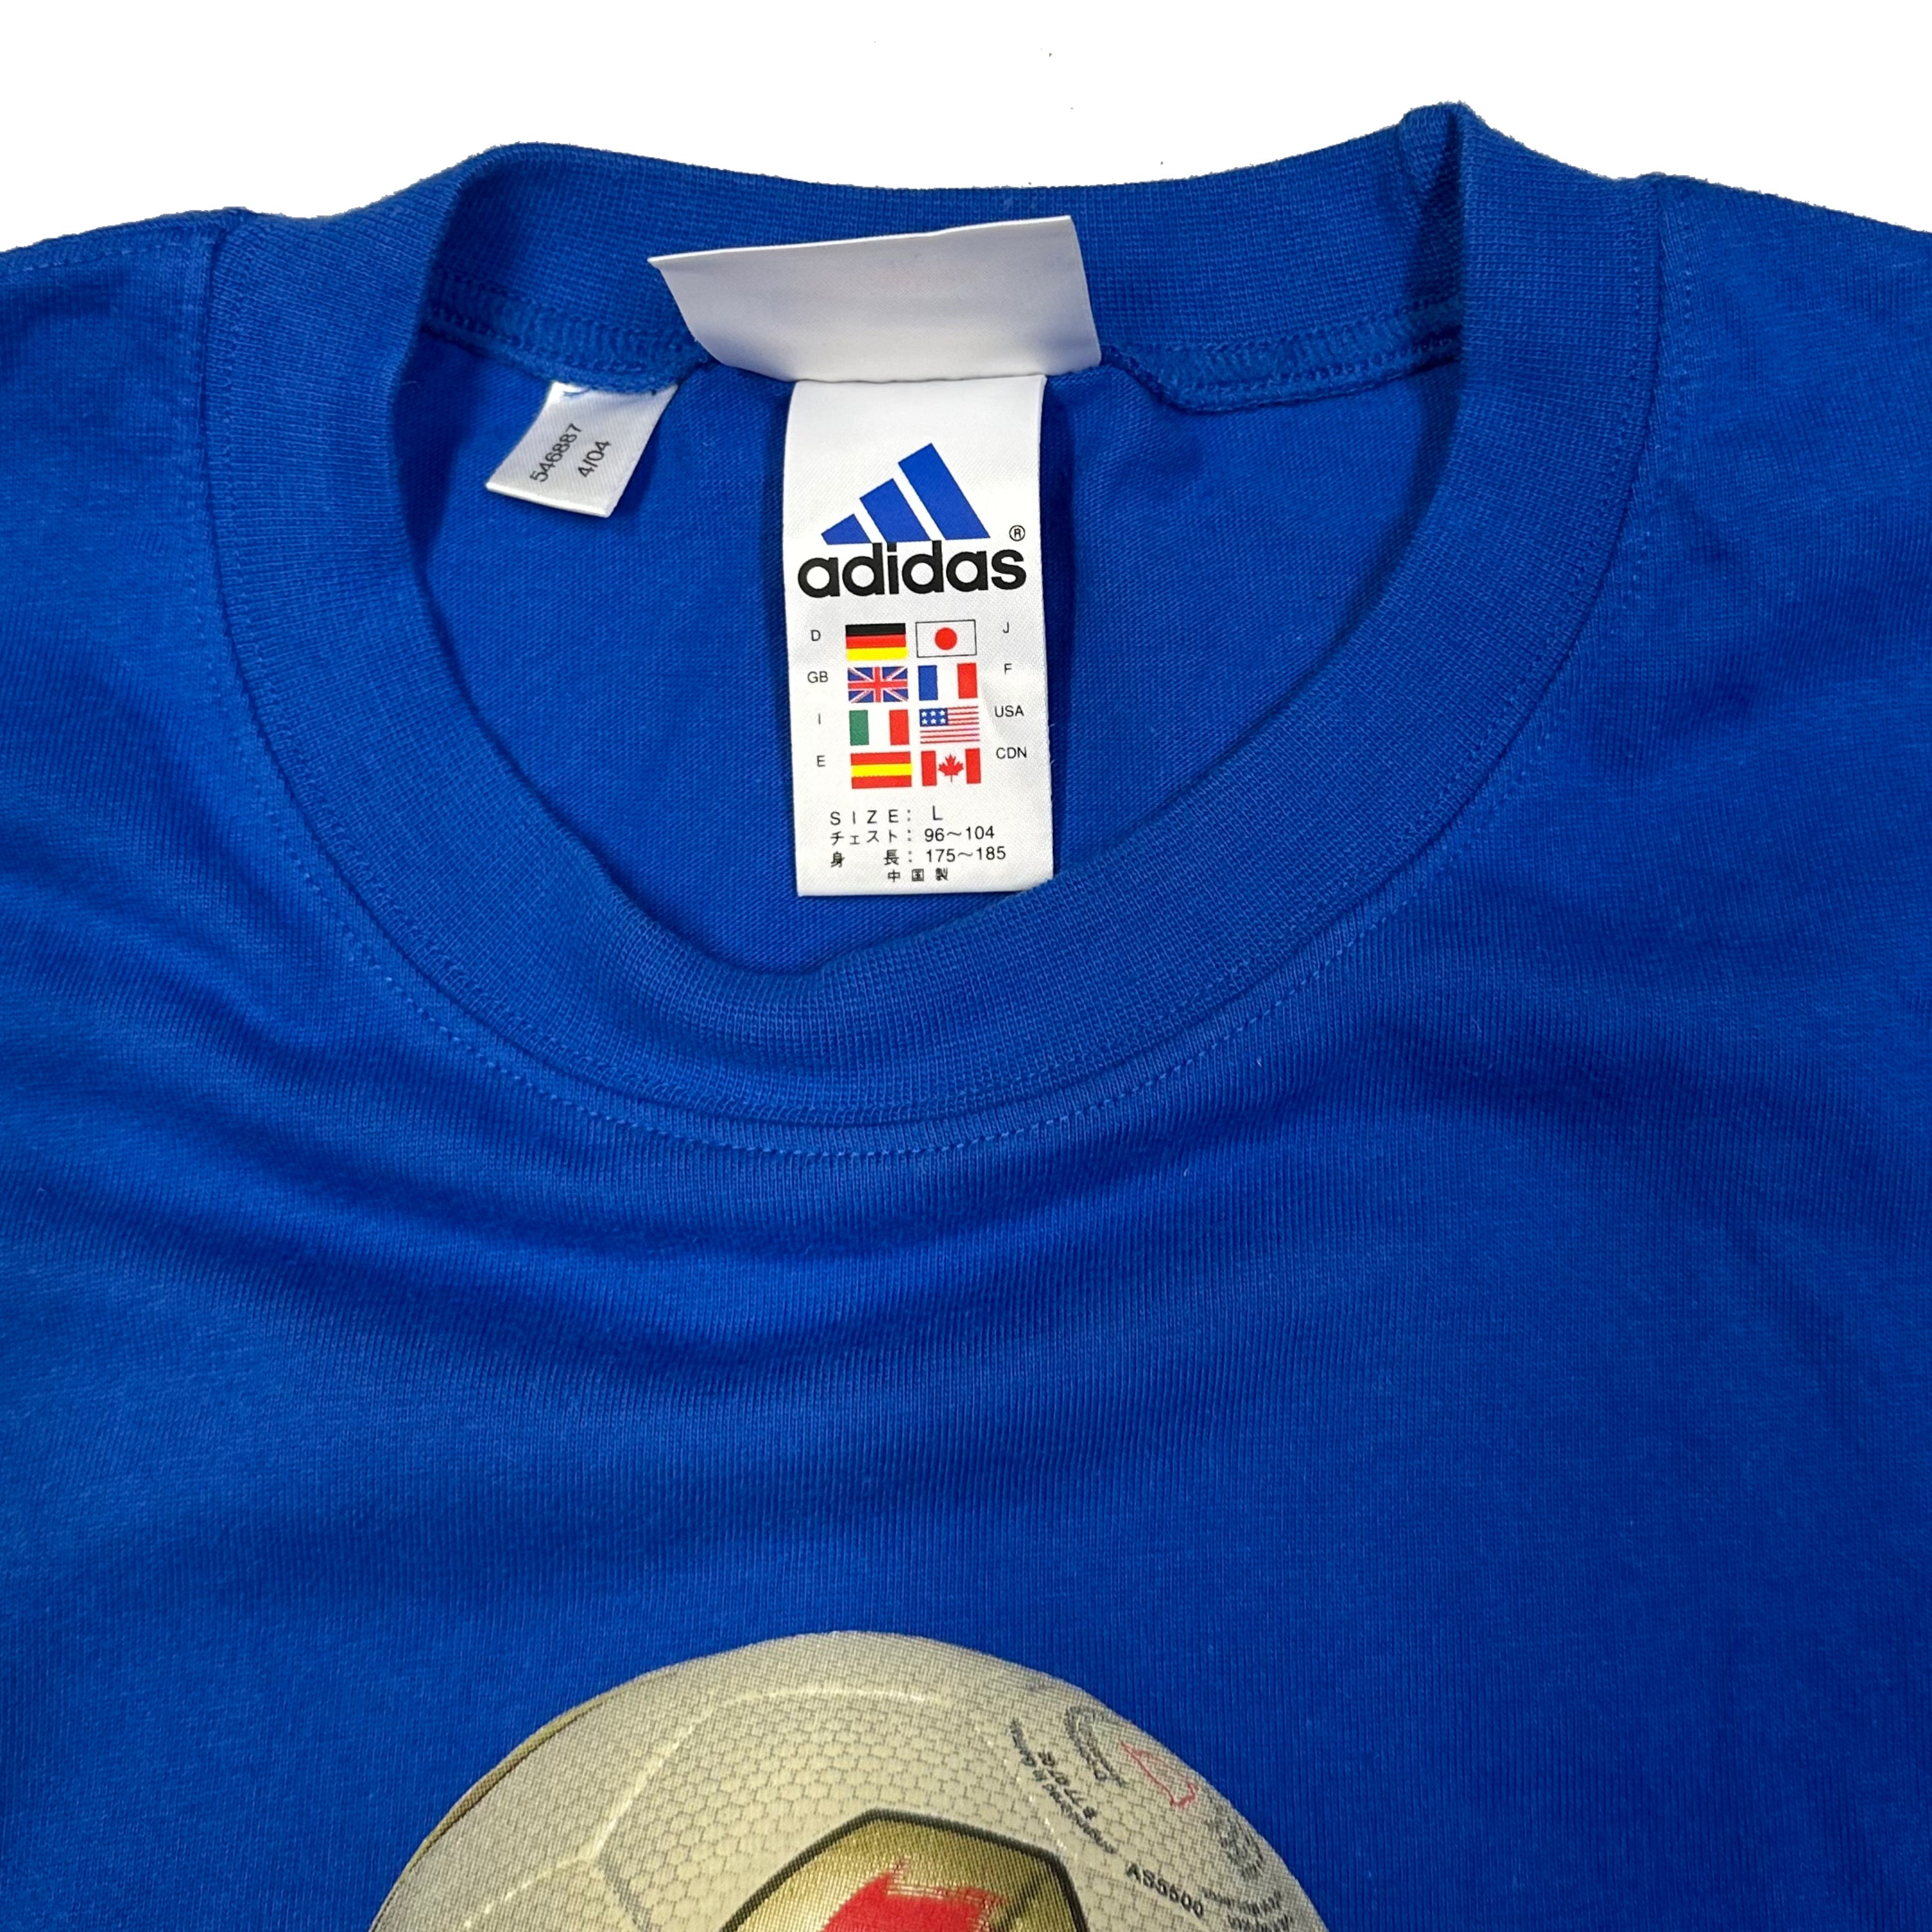 Adidas 2004 Pelias Ball Shirt In Blue ( L )